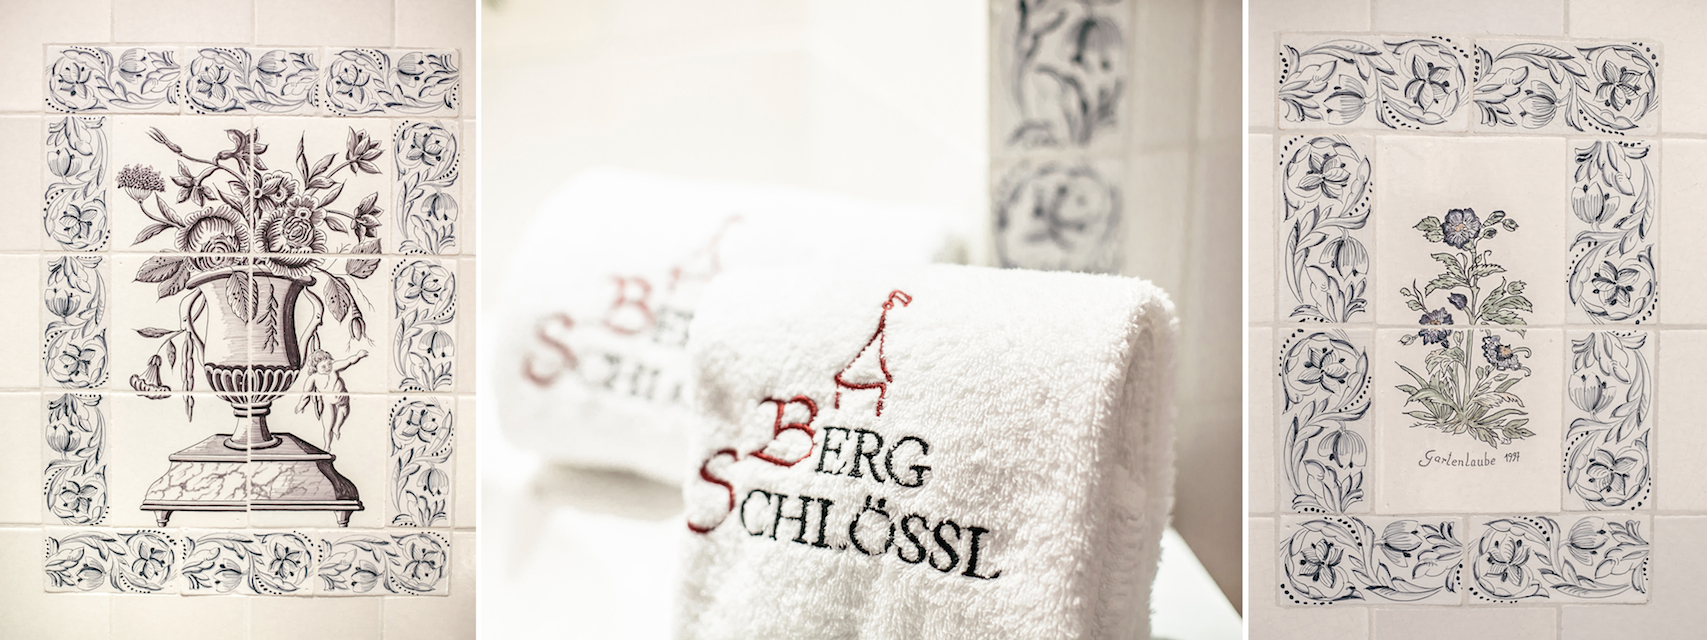 Handtücher mit Branding vom Hotel Bergschlössl